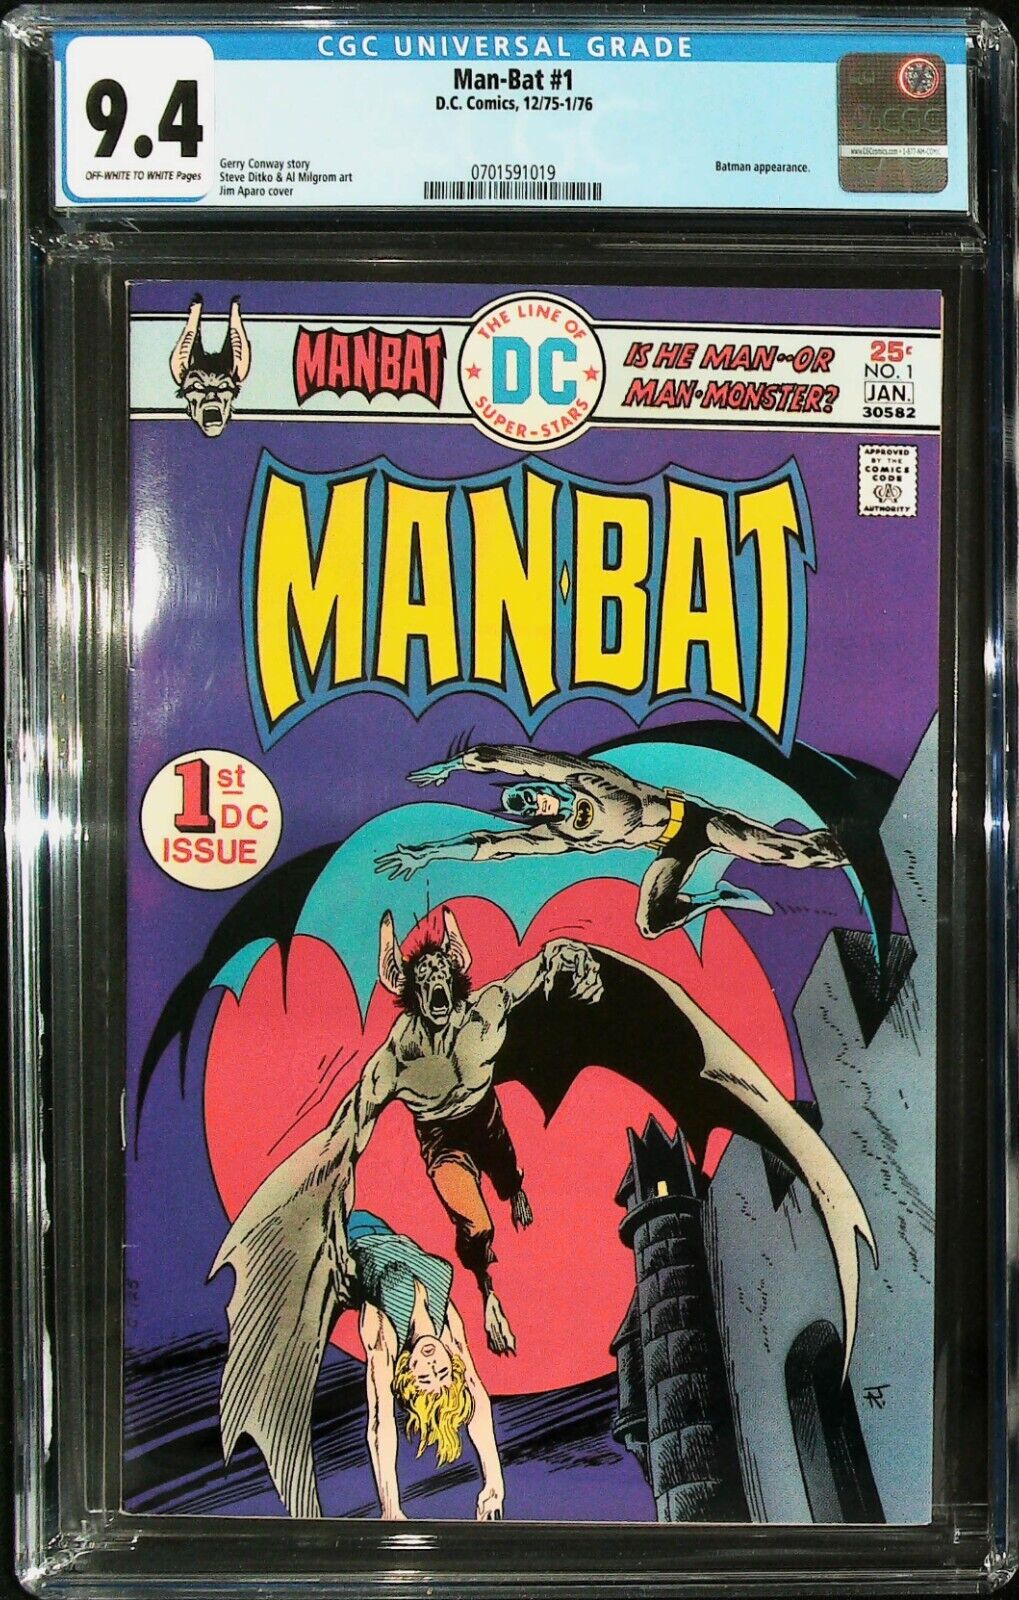 Man-Bat #1 Vol 1 (1975) - Batman Appearance - CGC Grade 9.4